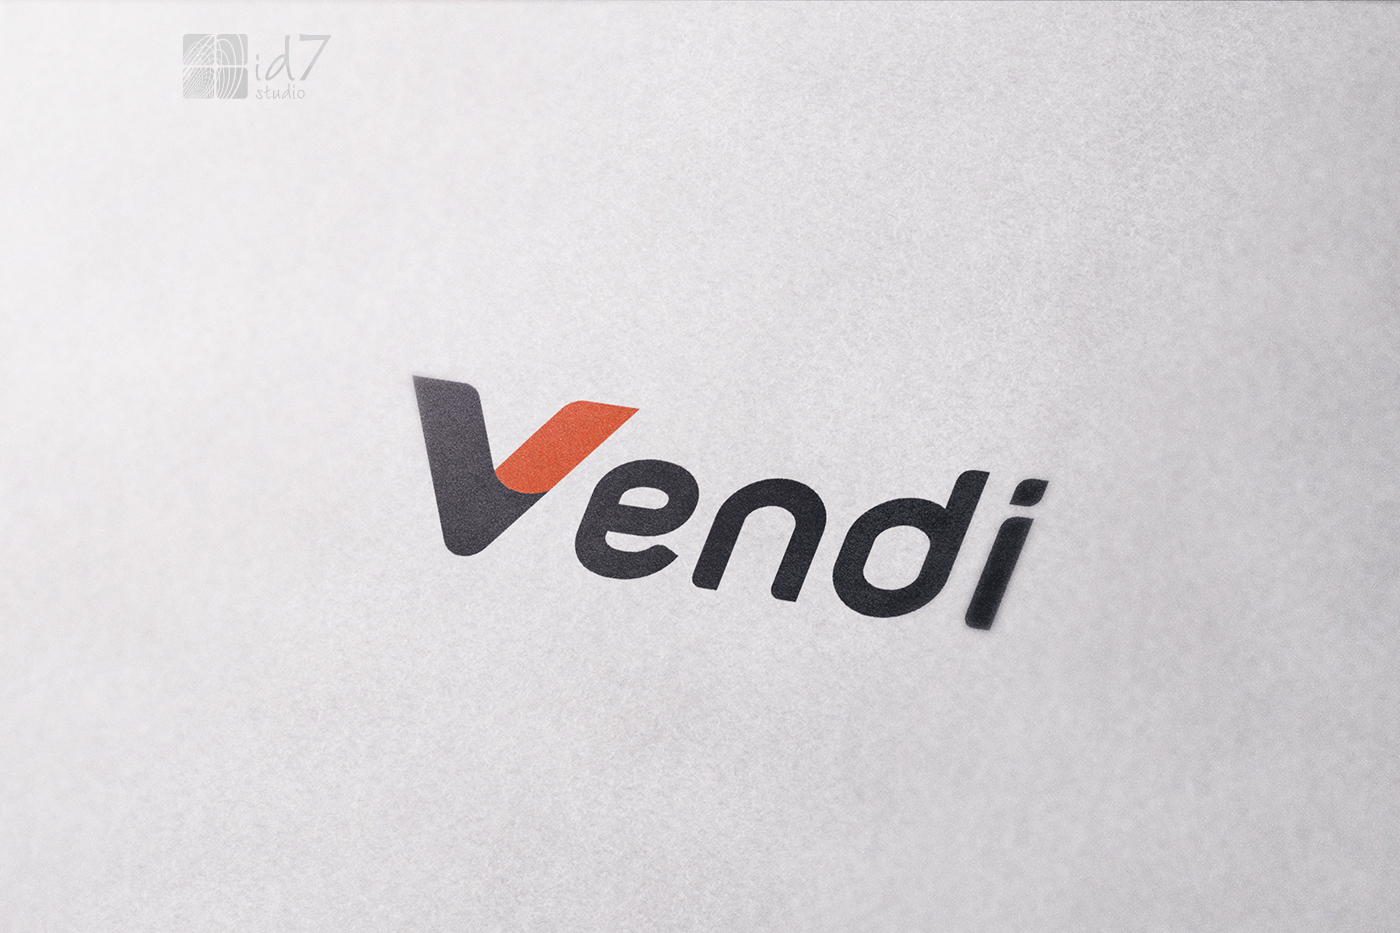 Logotipo Vendi